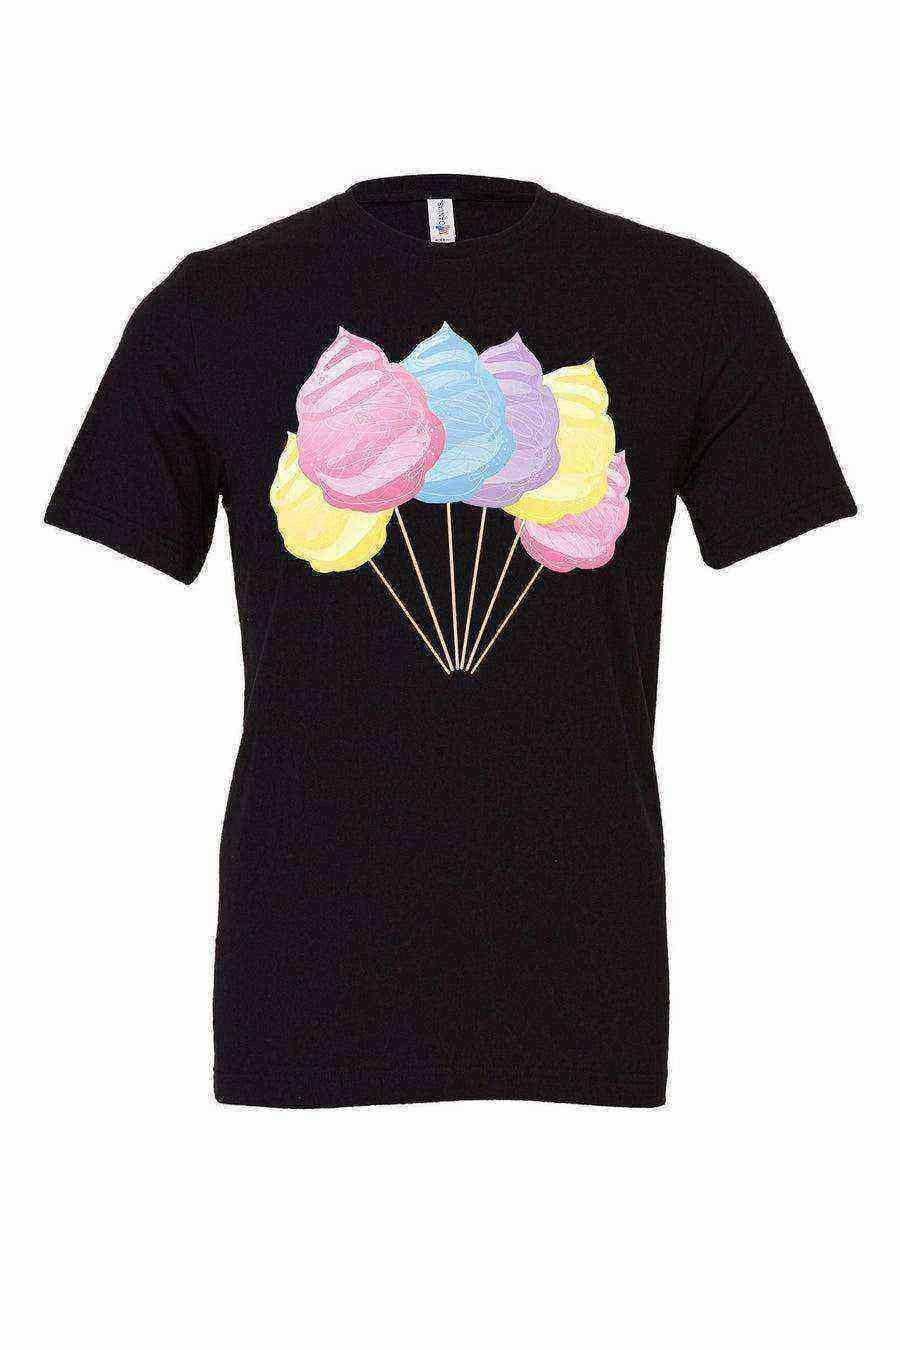 Toddler | Cotton Candy Shirt | Cotton Candy | Summer Shirt - Dylan's Tees